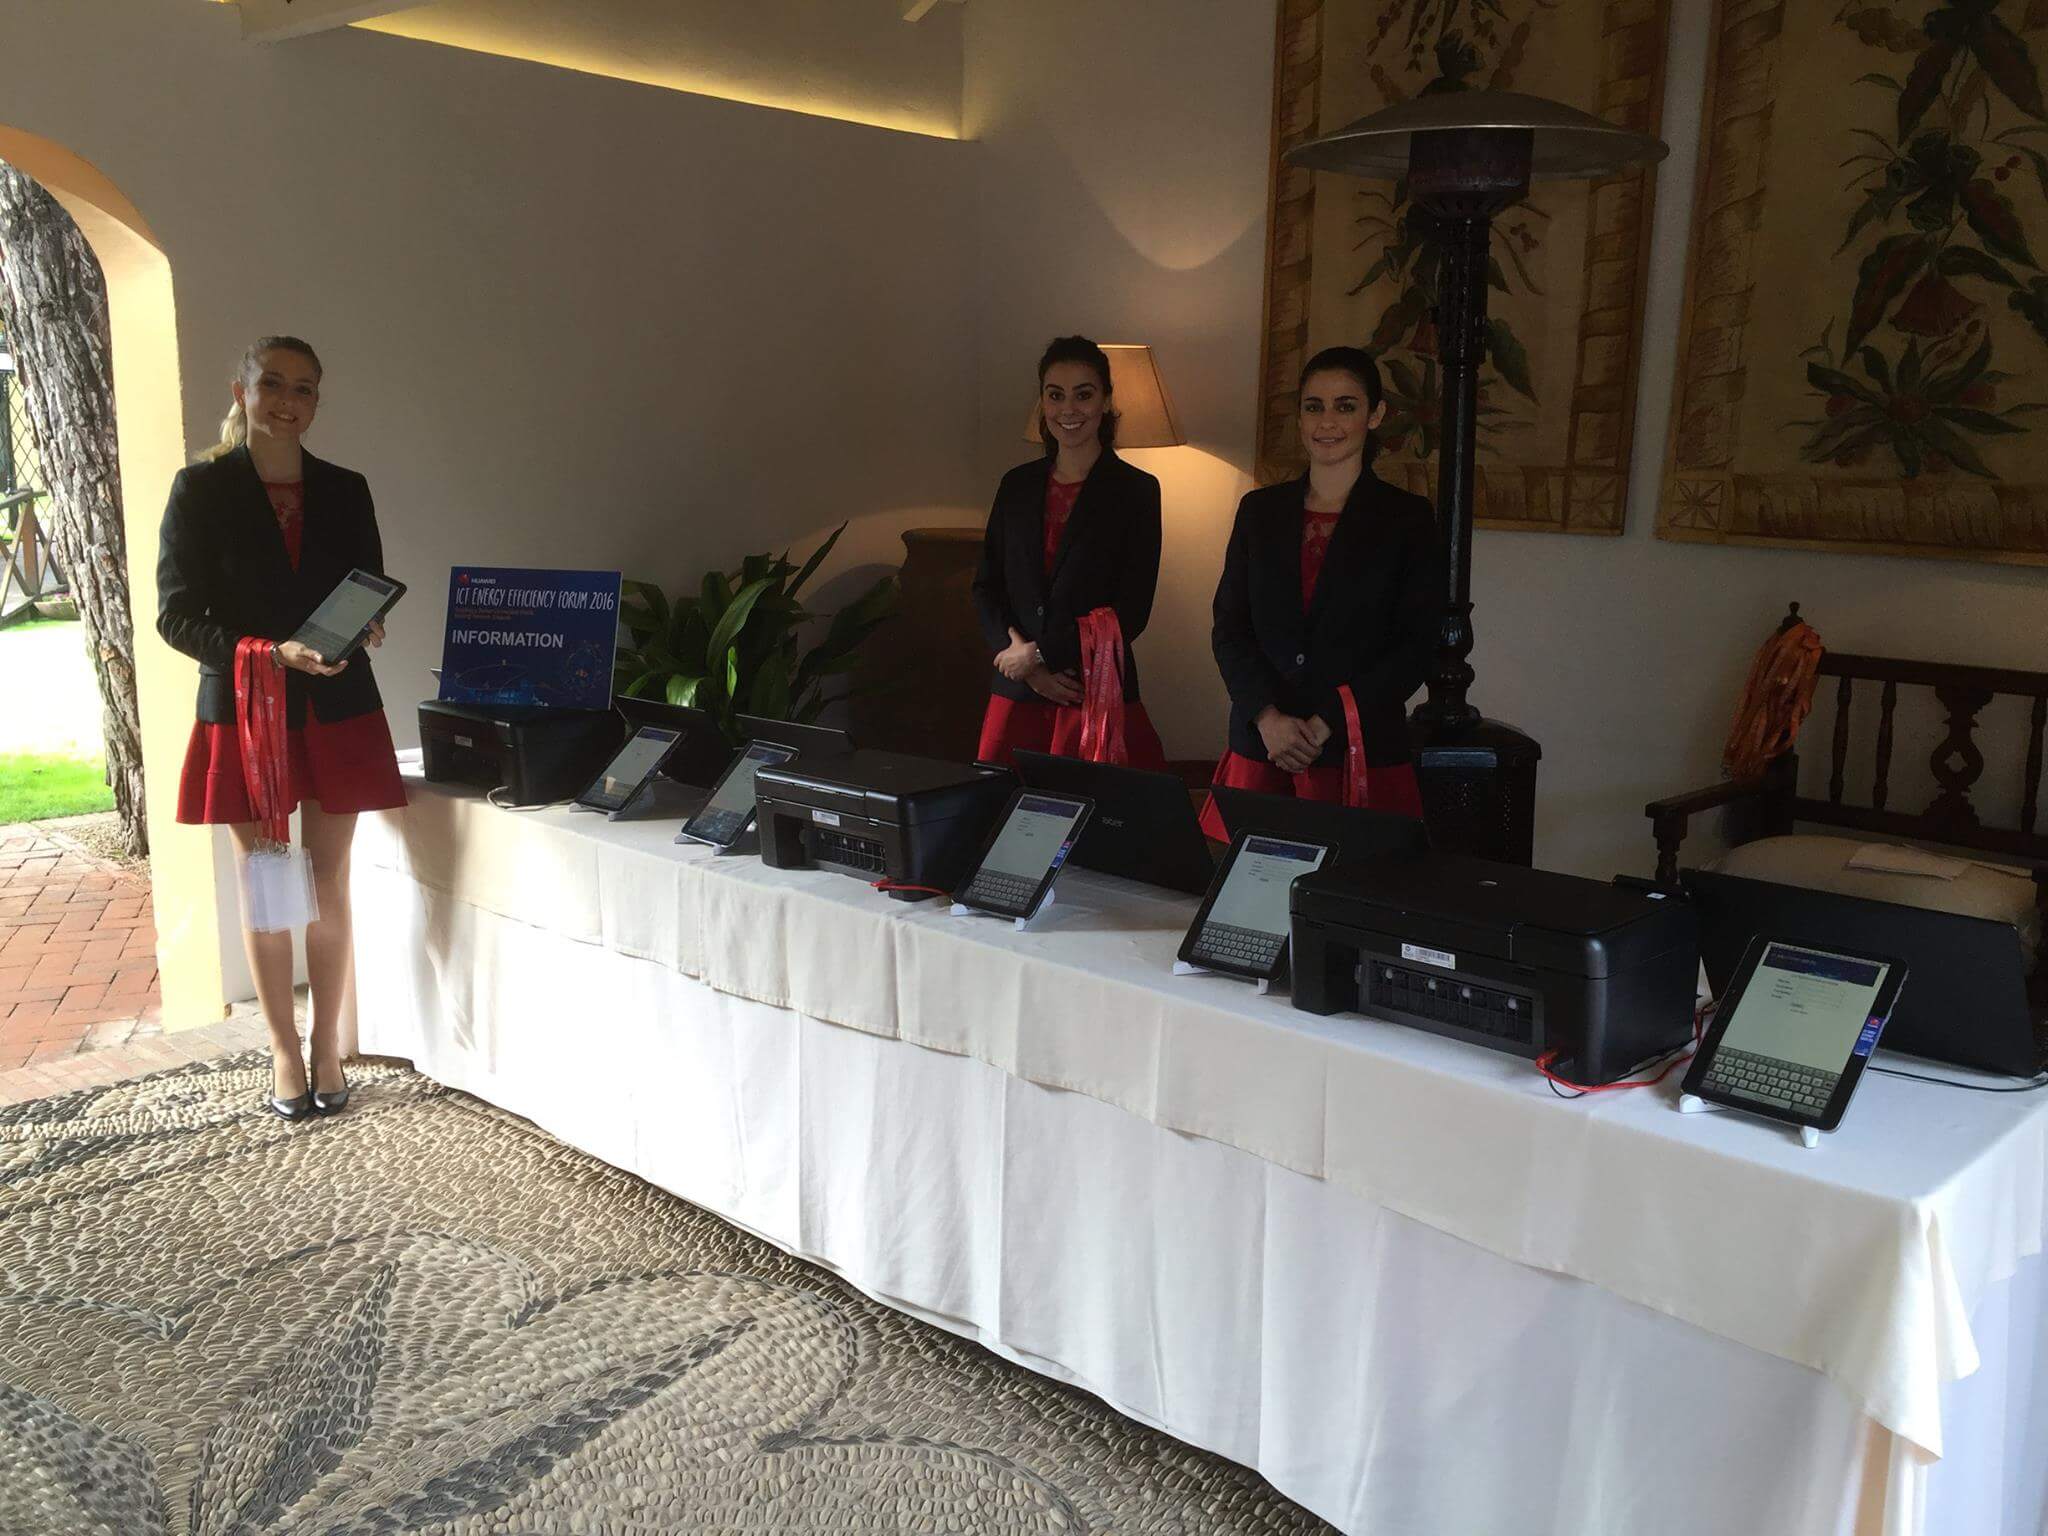 hostesses showing registration system